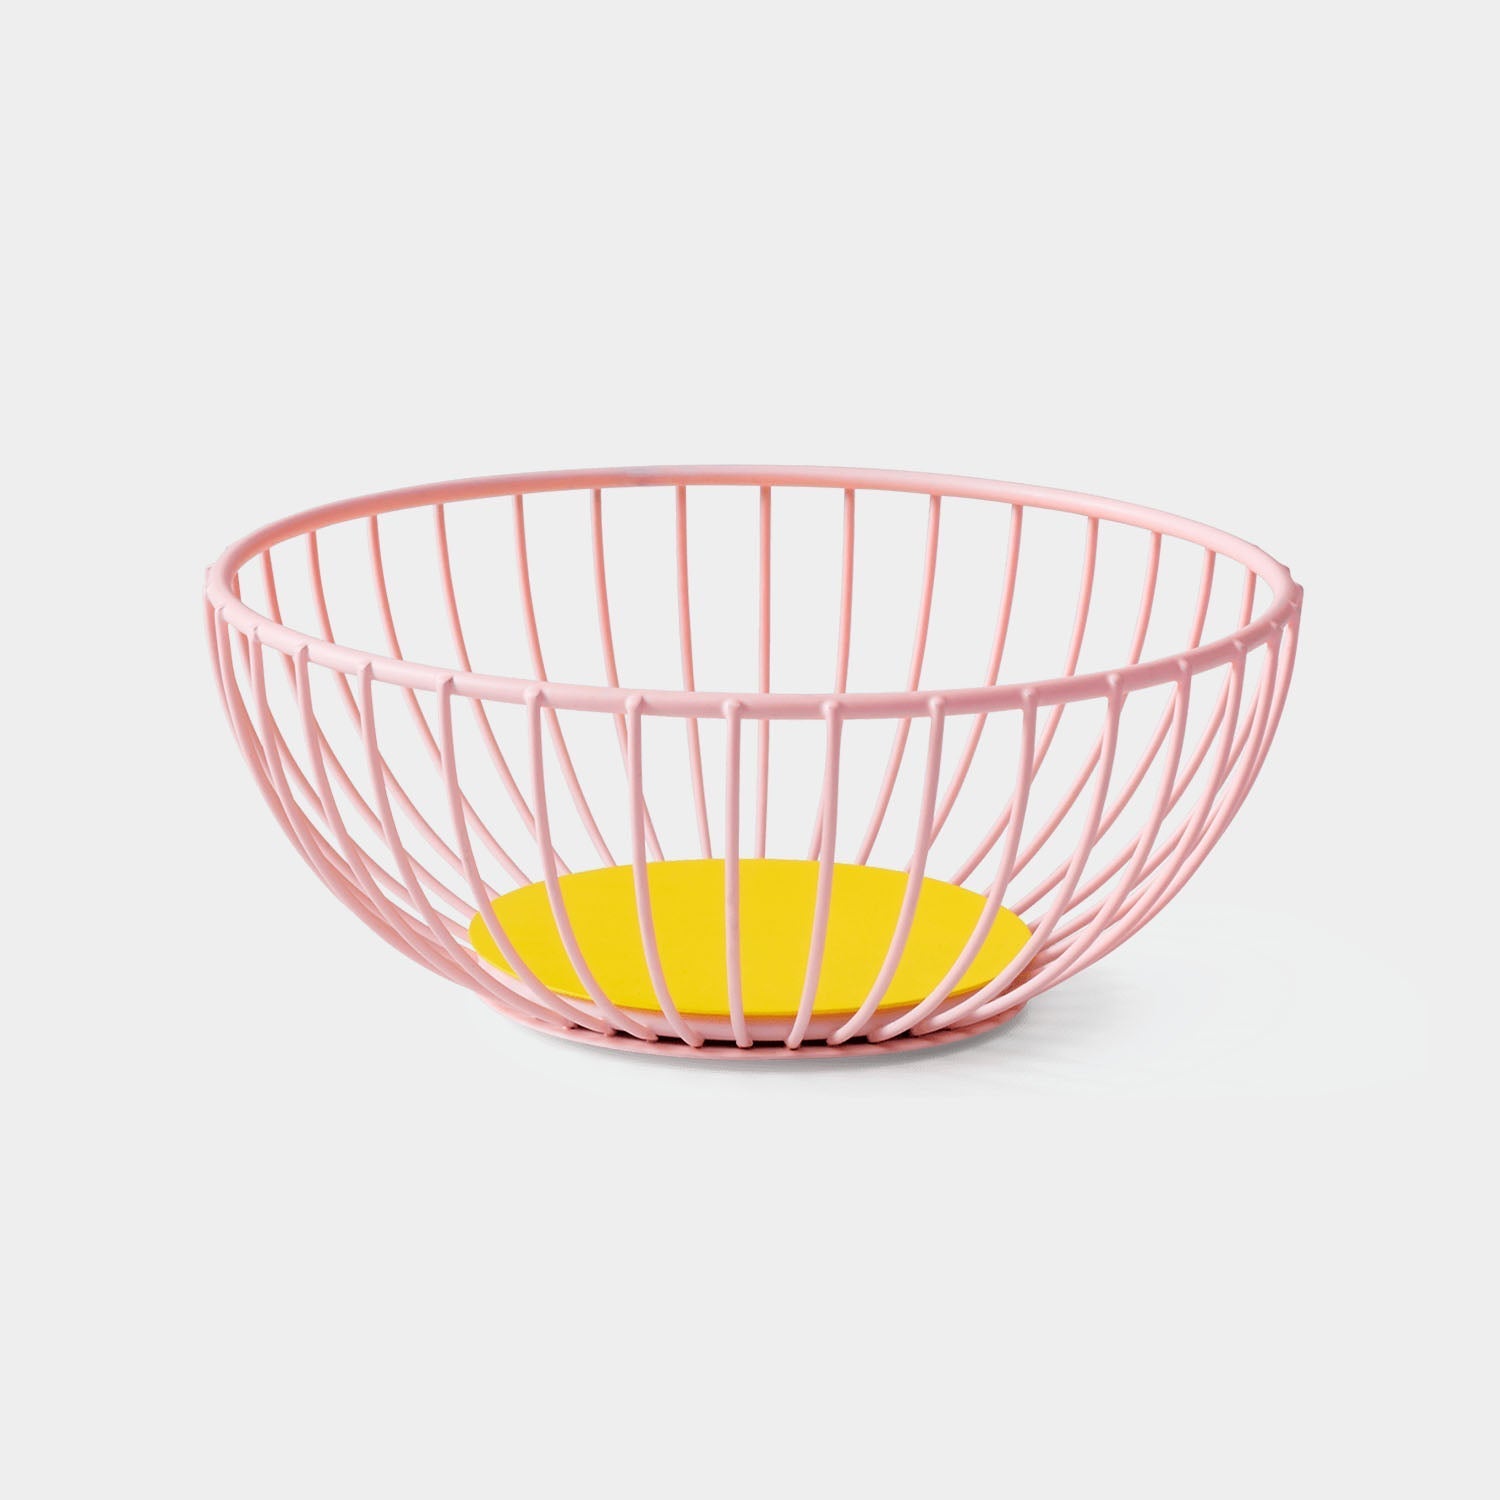 Iris Wire Basket in pink by OCTAEVO